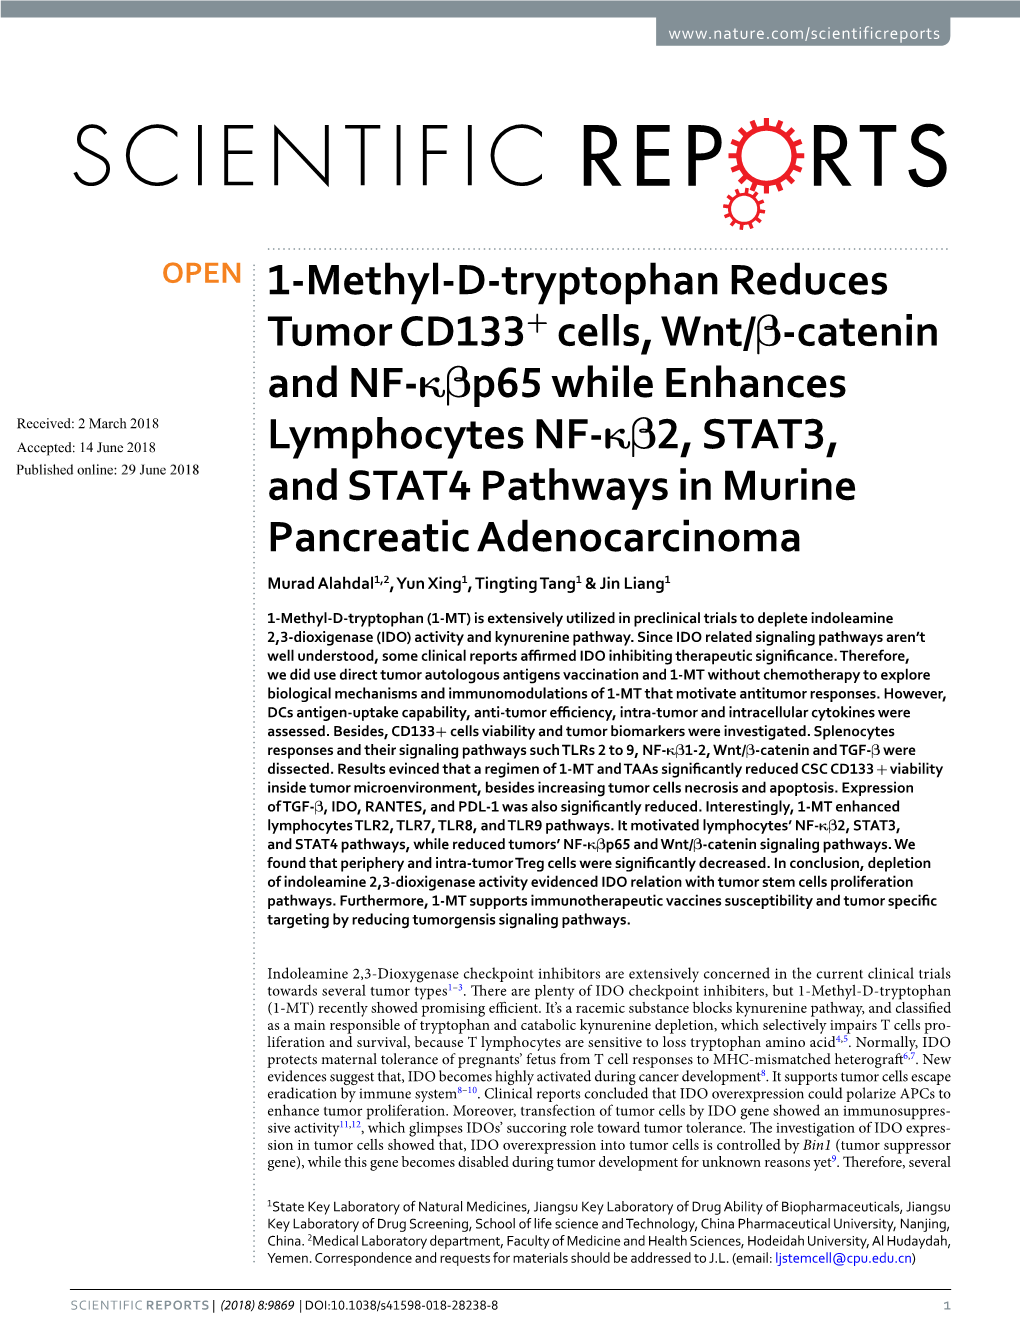 1-Methyl-D-Tryptophan Reduces Tumor CD133+ Cells, Wnt/Β-Catenin